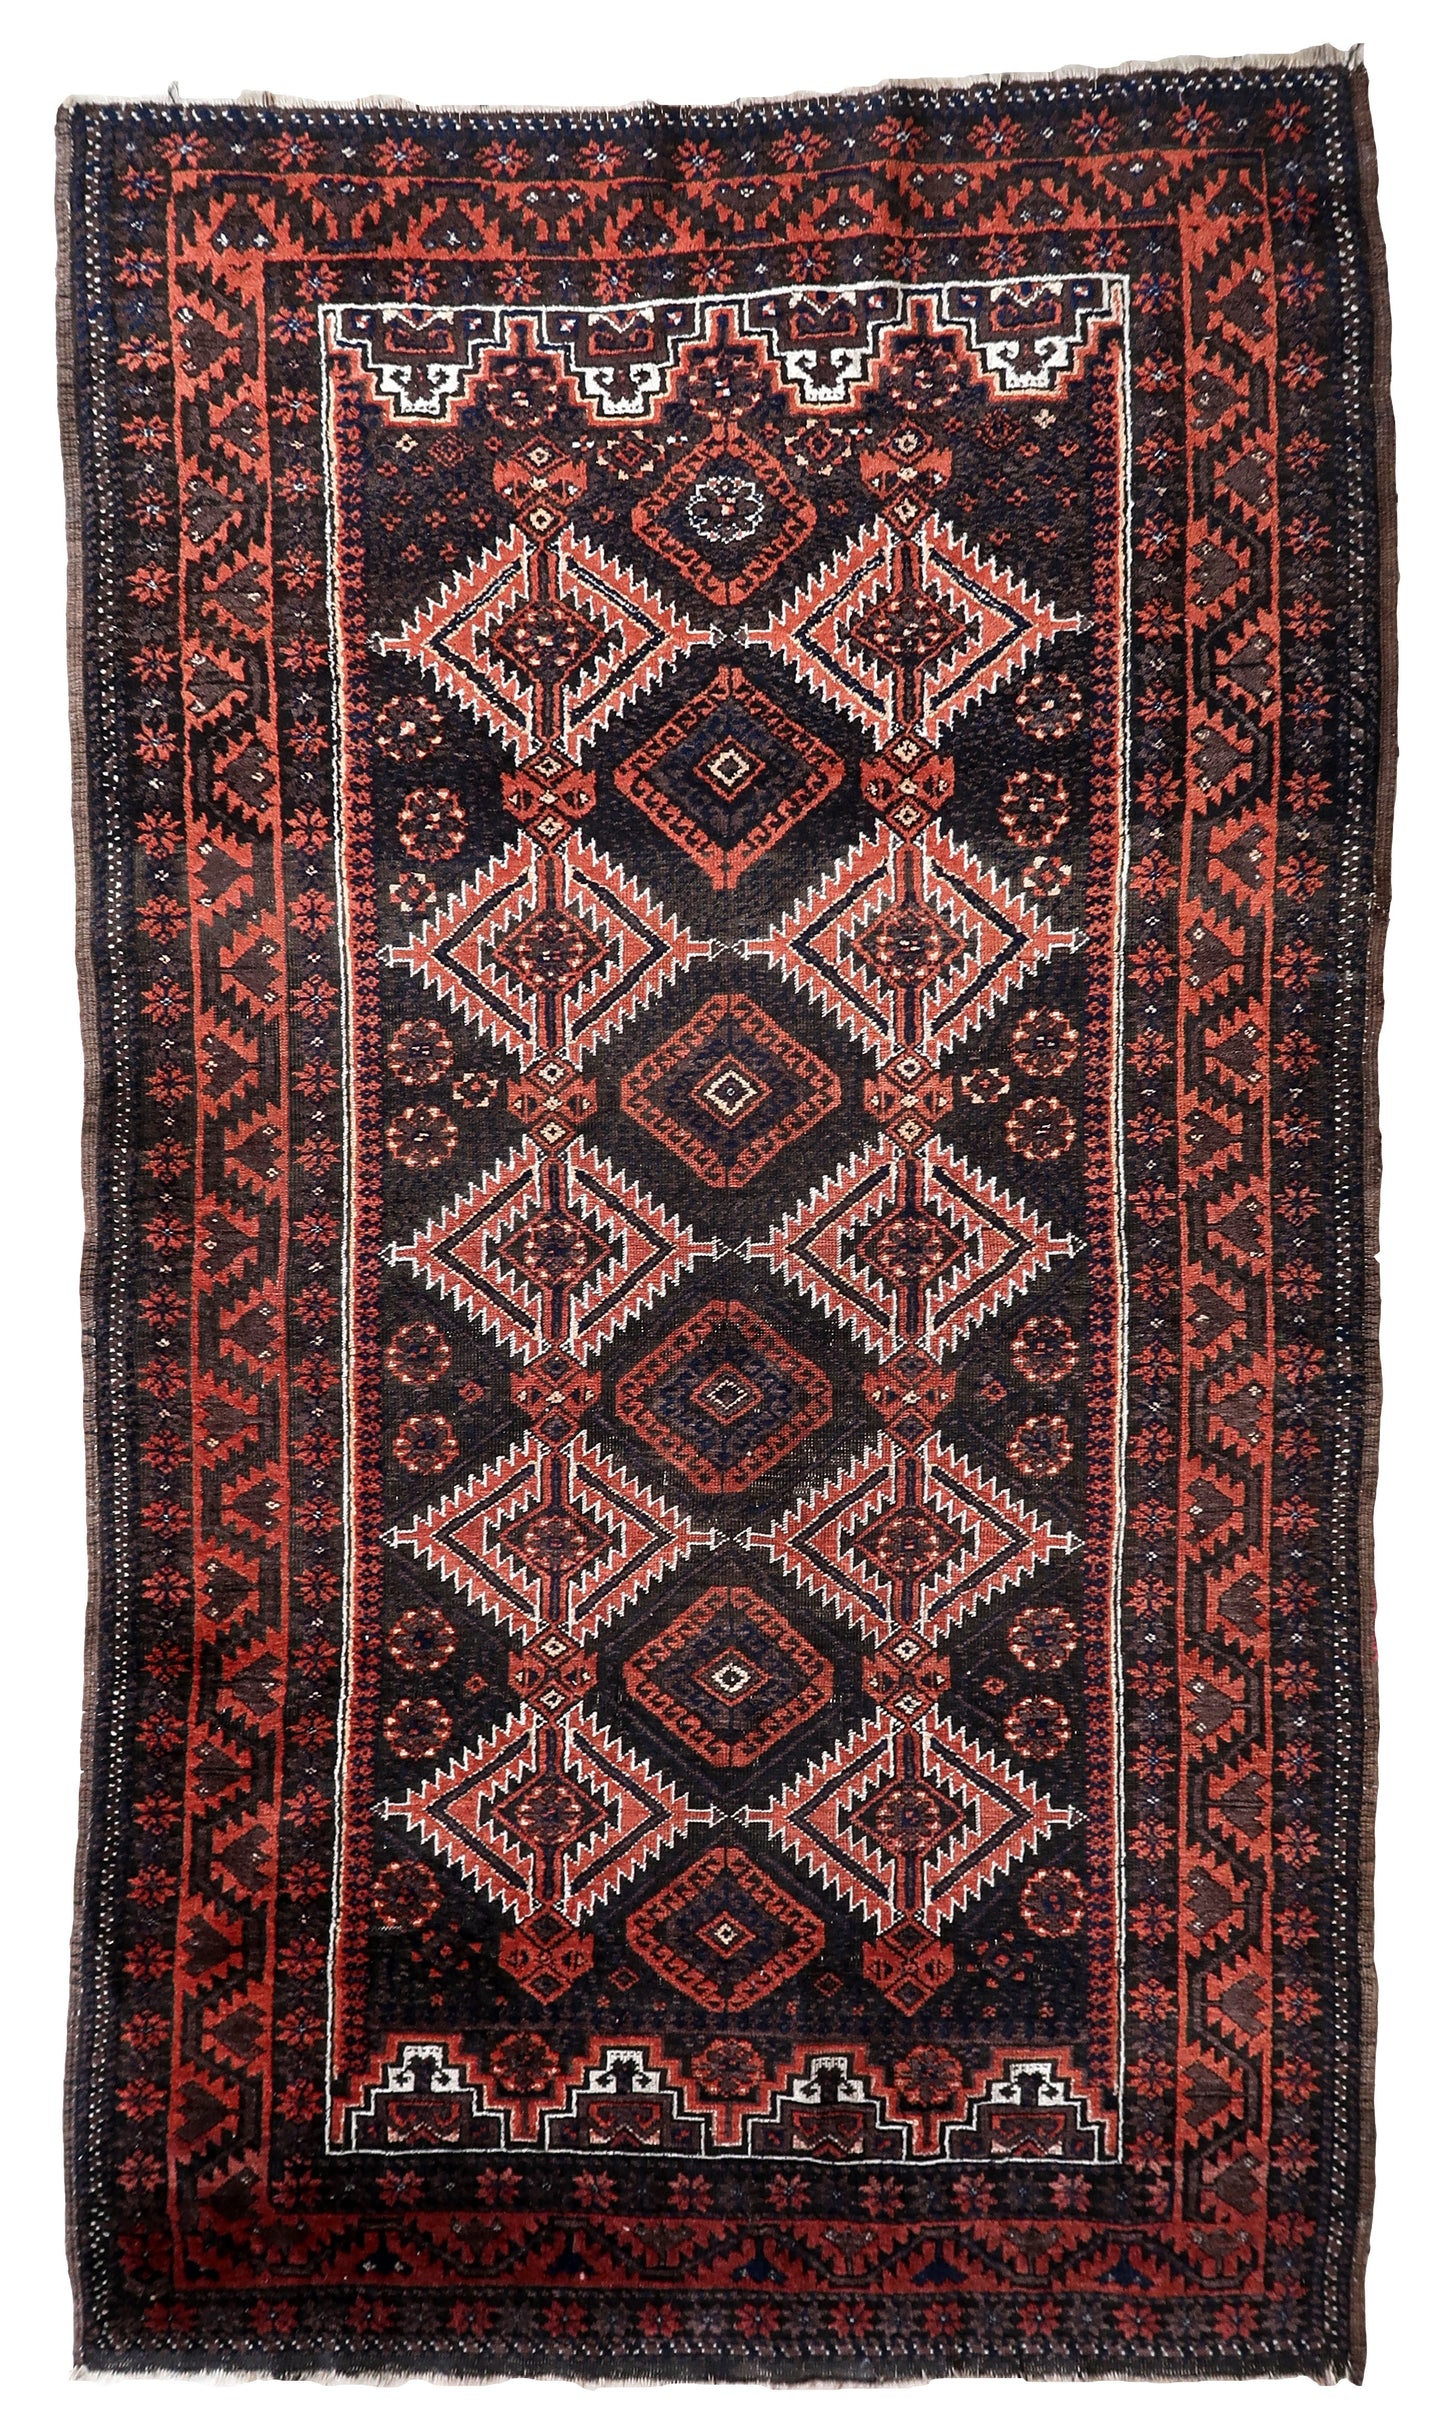 Handmade antique Afghan Baluch rug 1920s